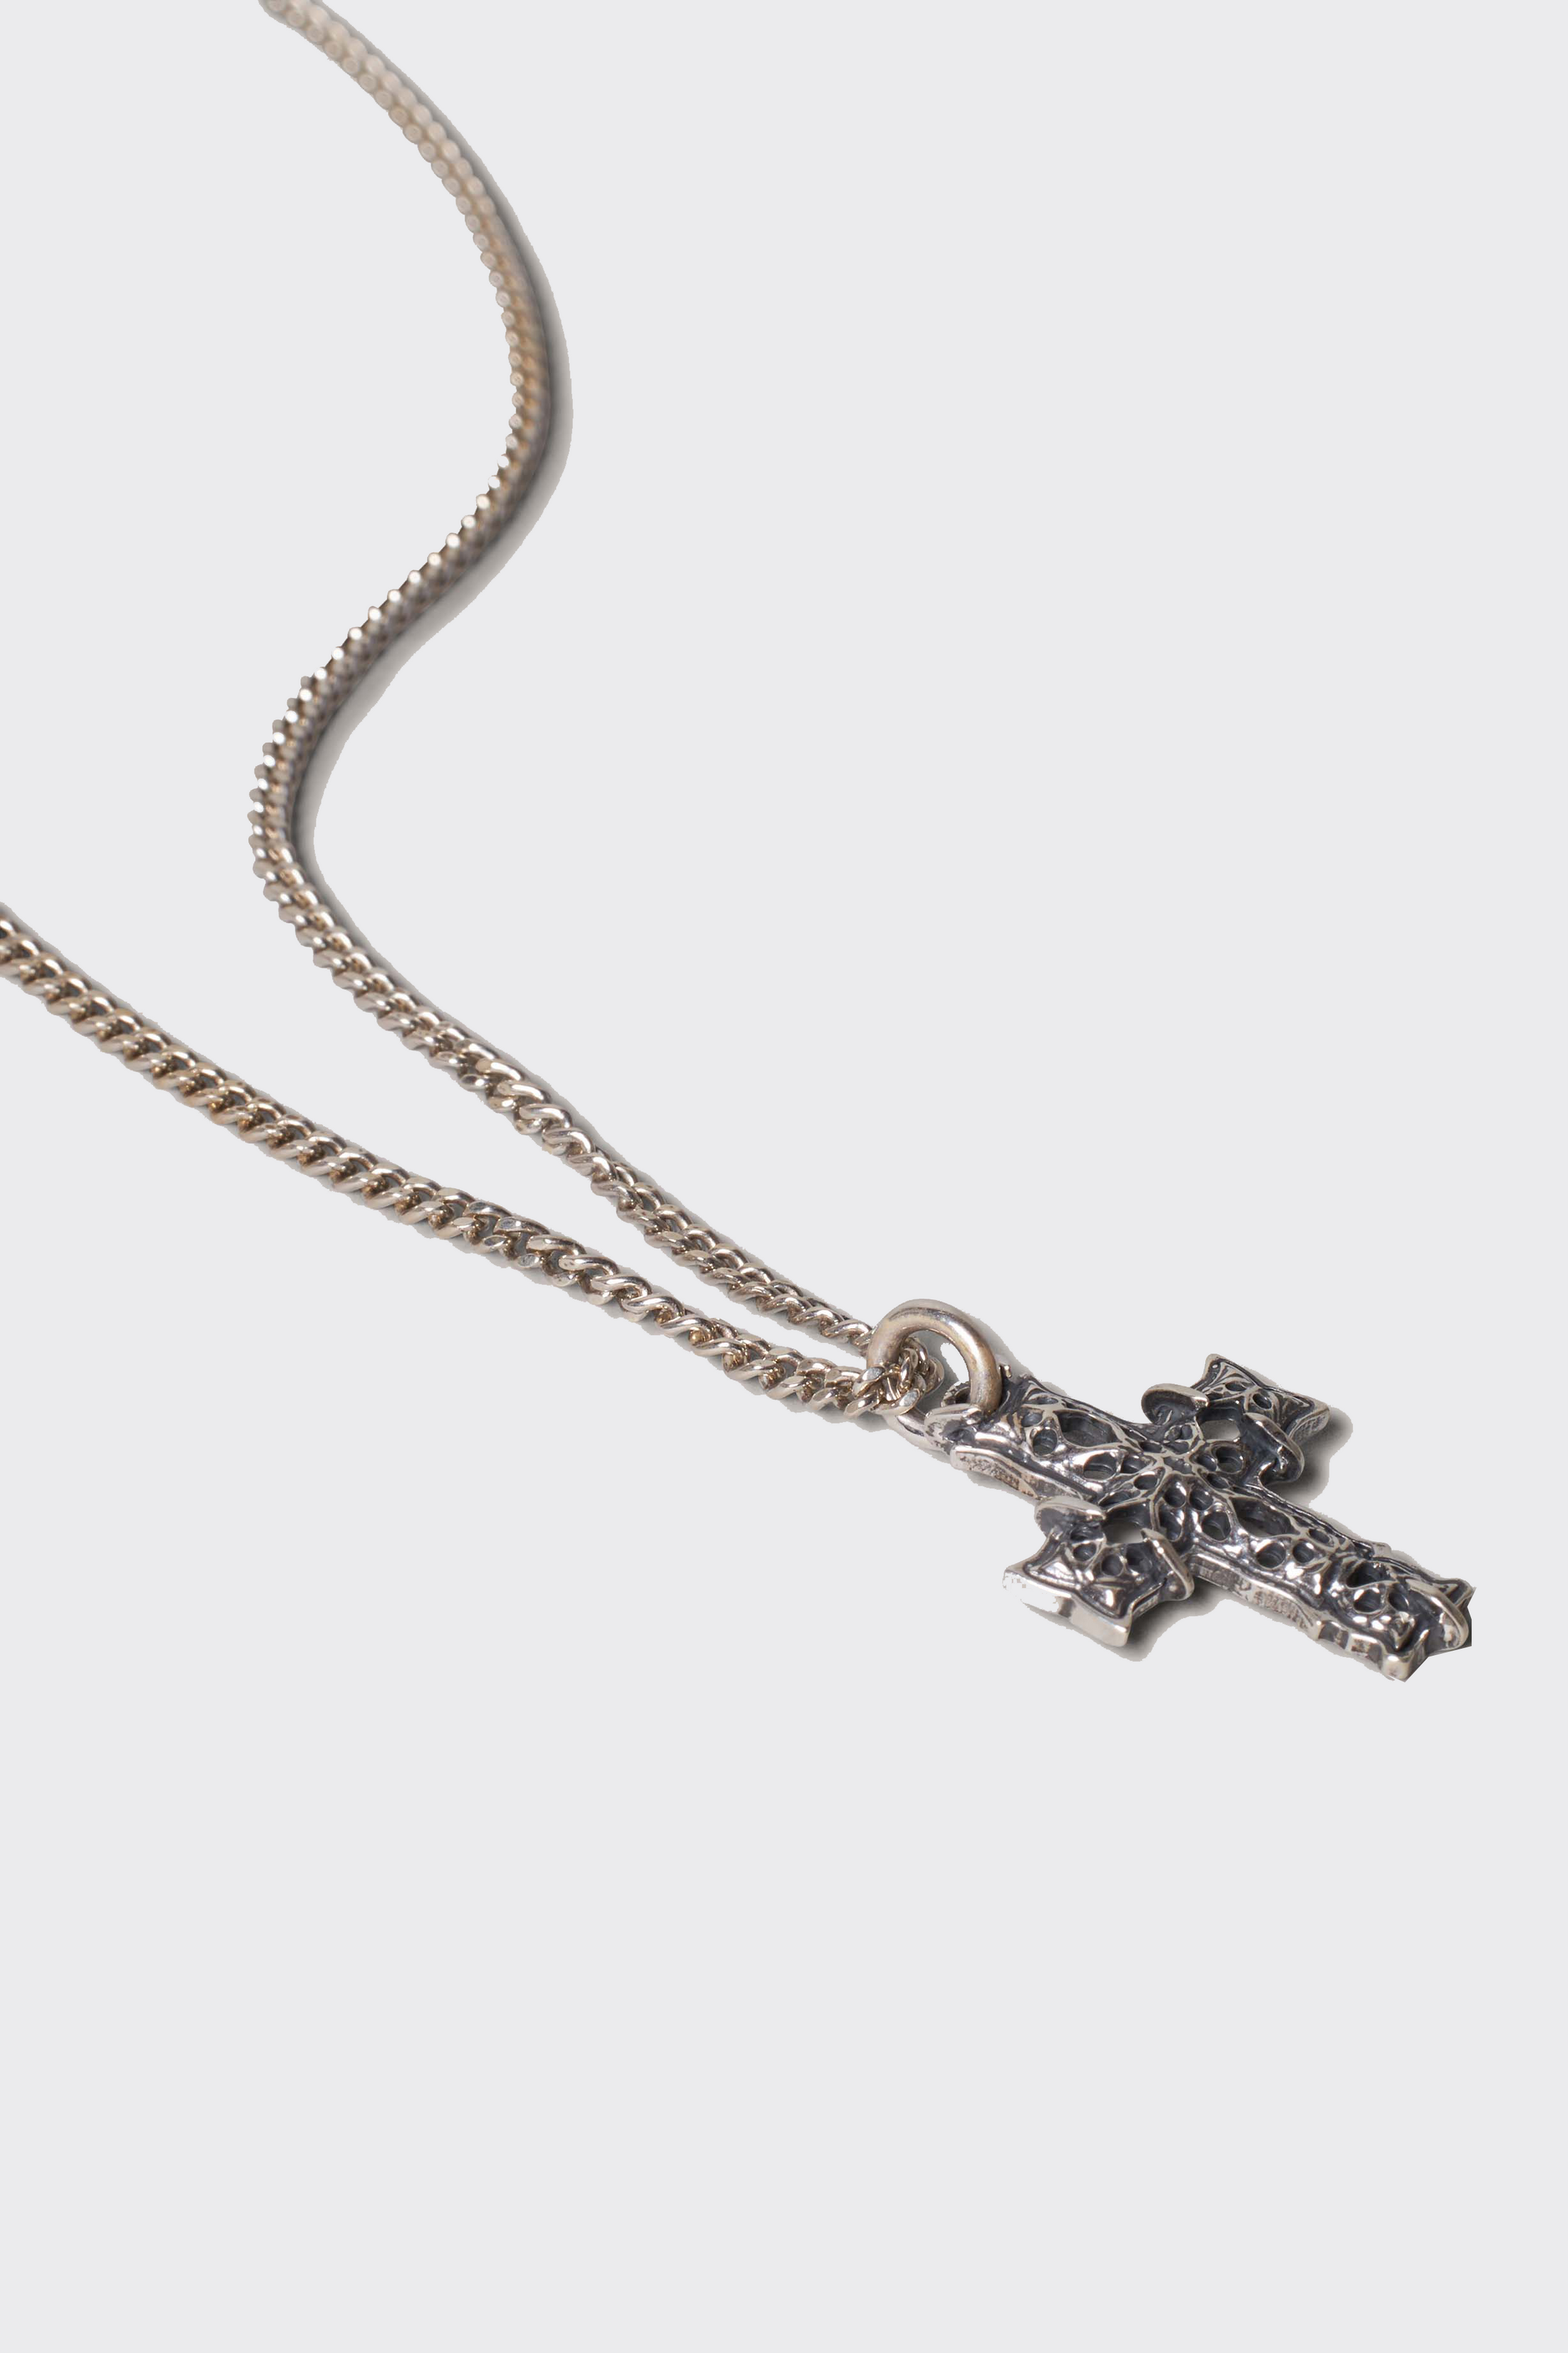 Notre-Dame Cross Necklace